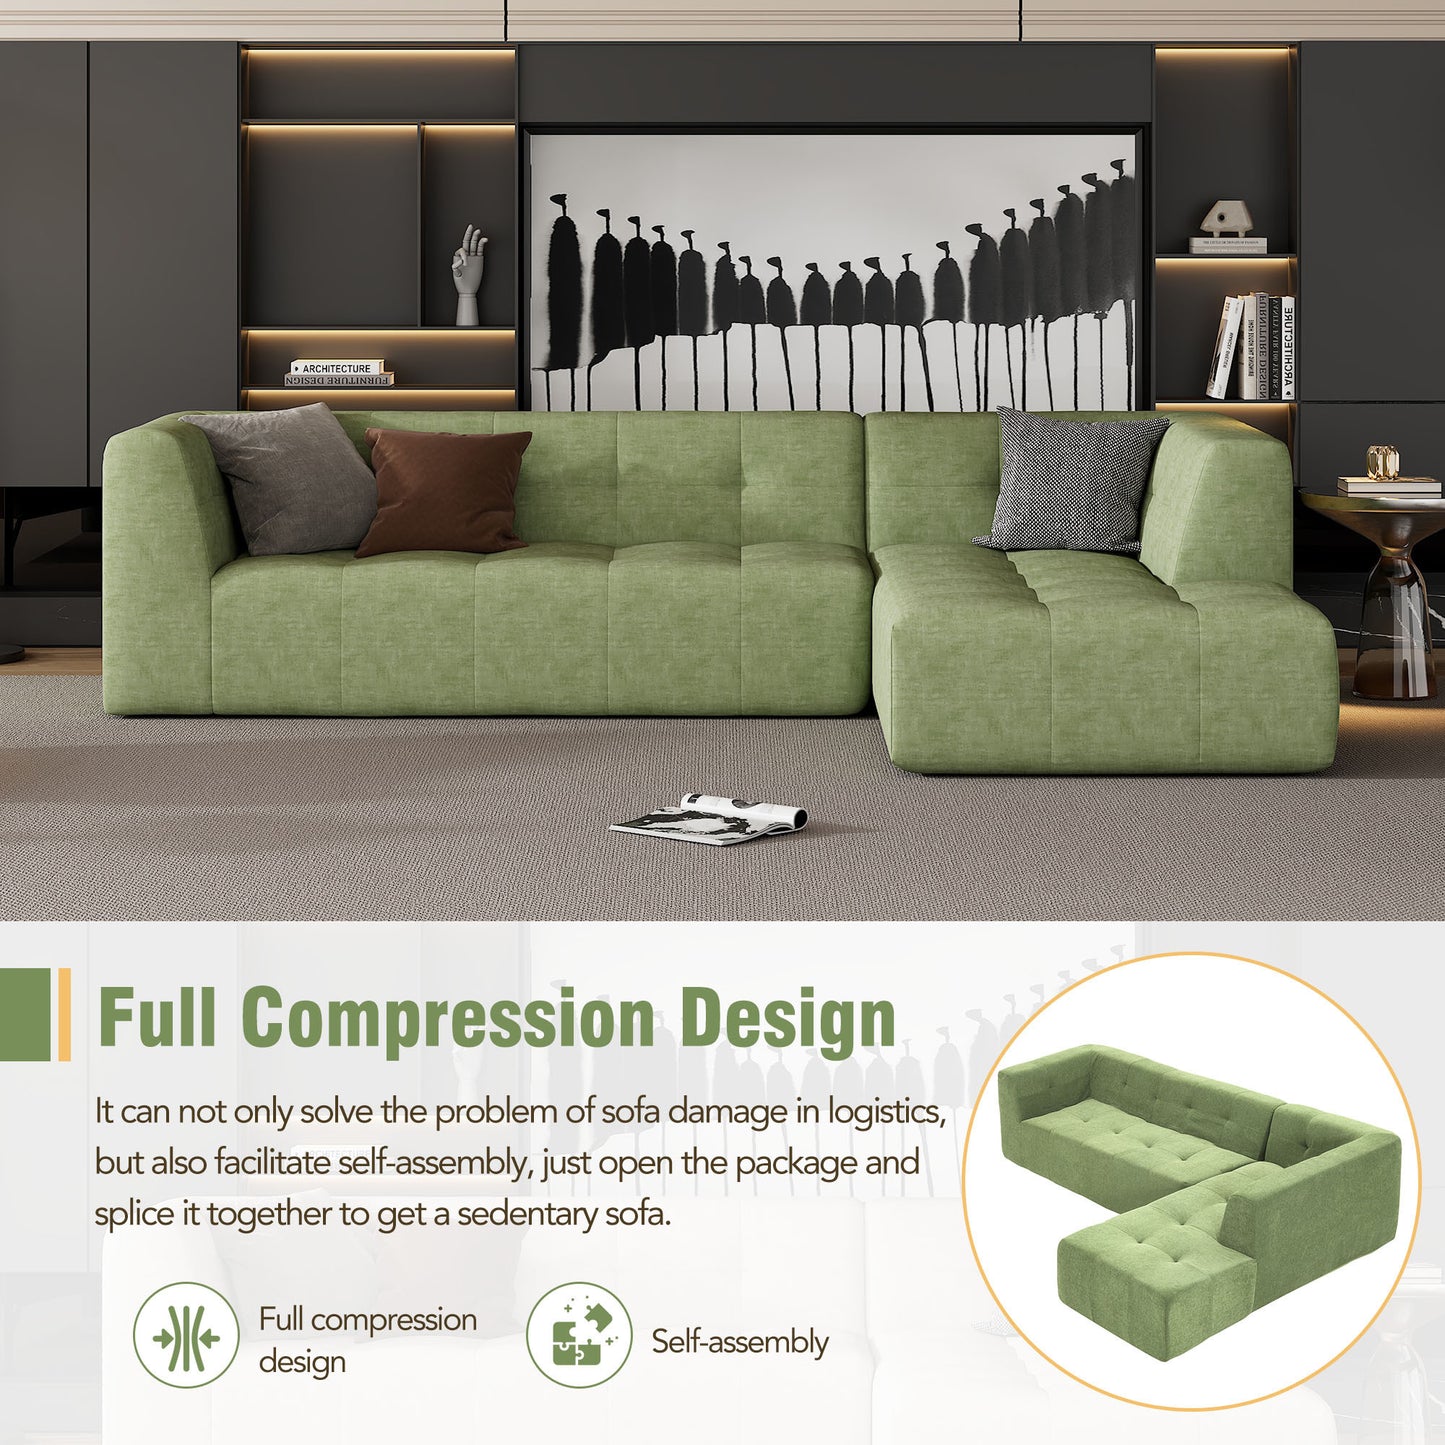 Green L-Shaped Modular Living Room Sofa Set